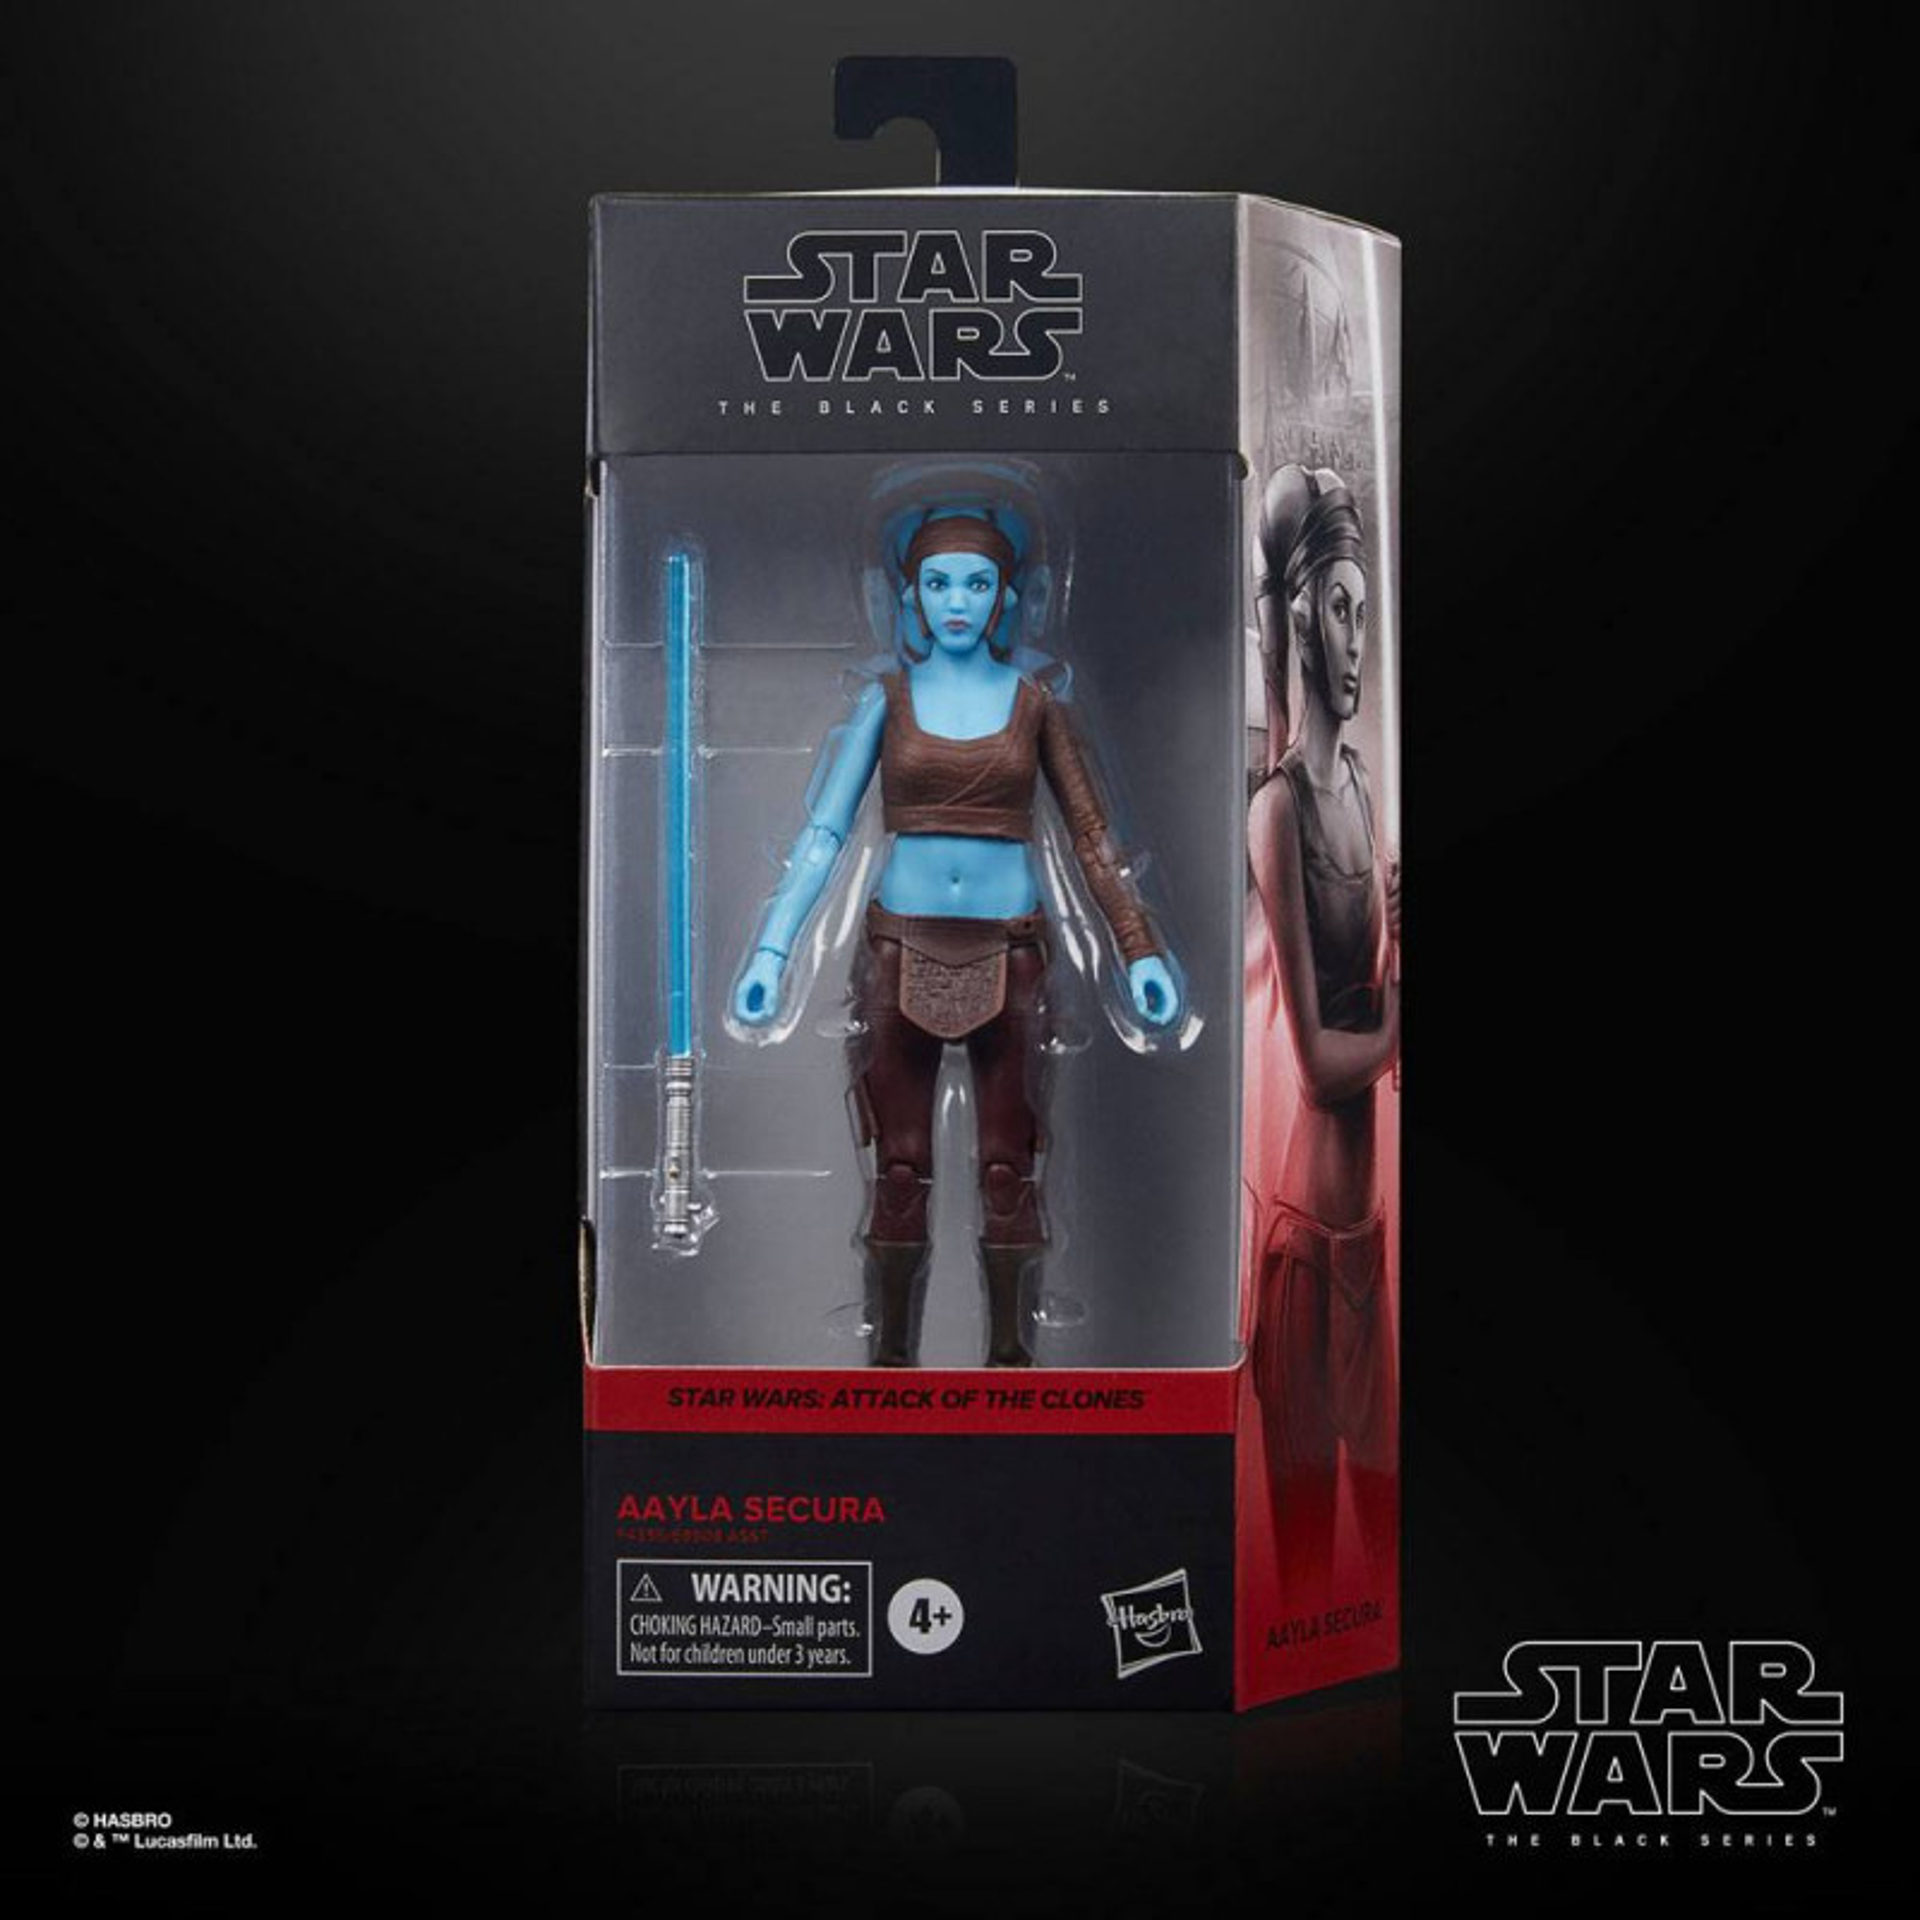 Star Wars The Black Series - Figurine d'action de Aayla Secura 15cm